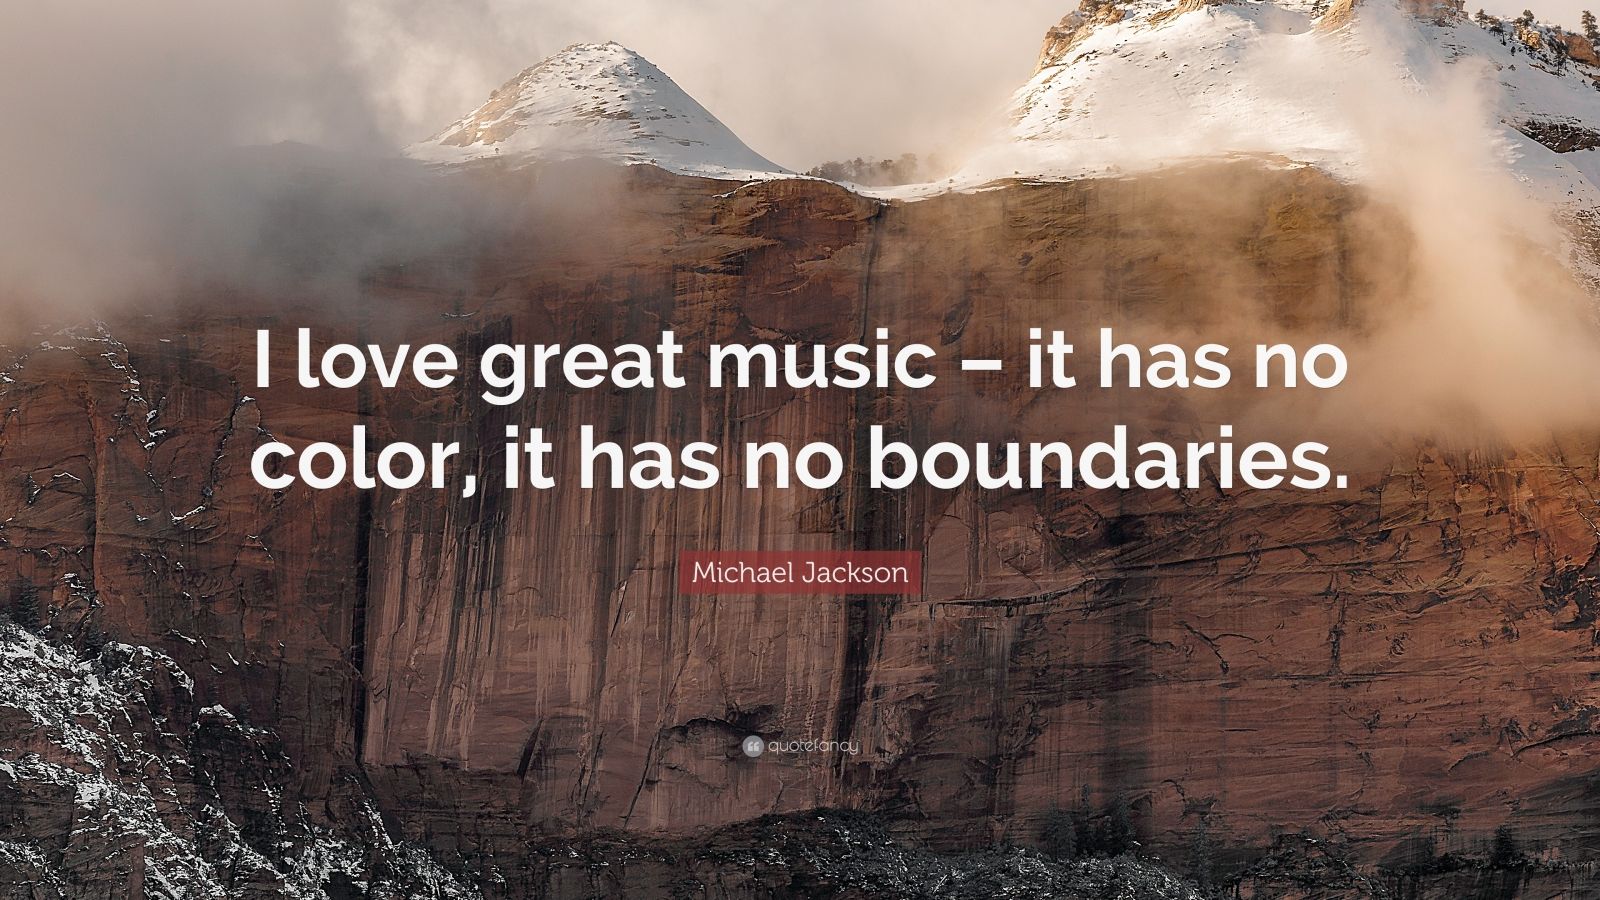 Michael Jackson Quote: "I love great music - it has no color, it has no boundaries." (12 ...